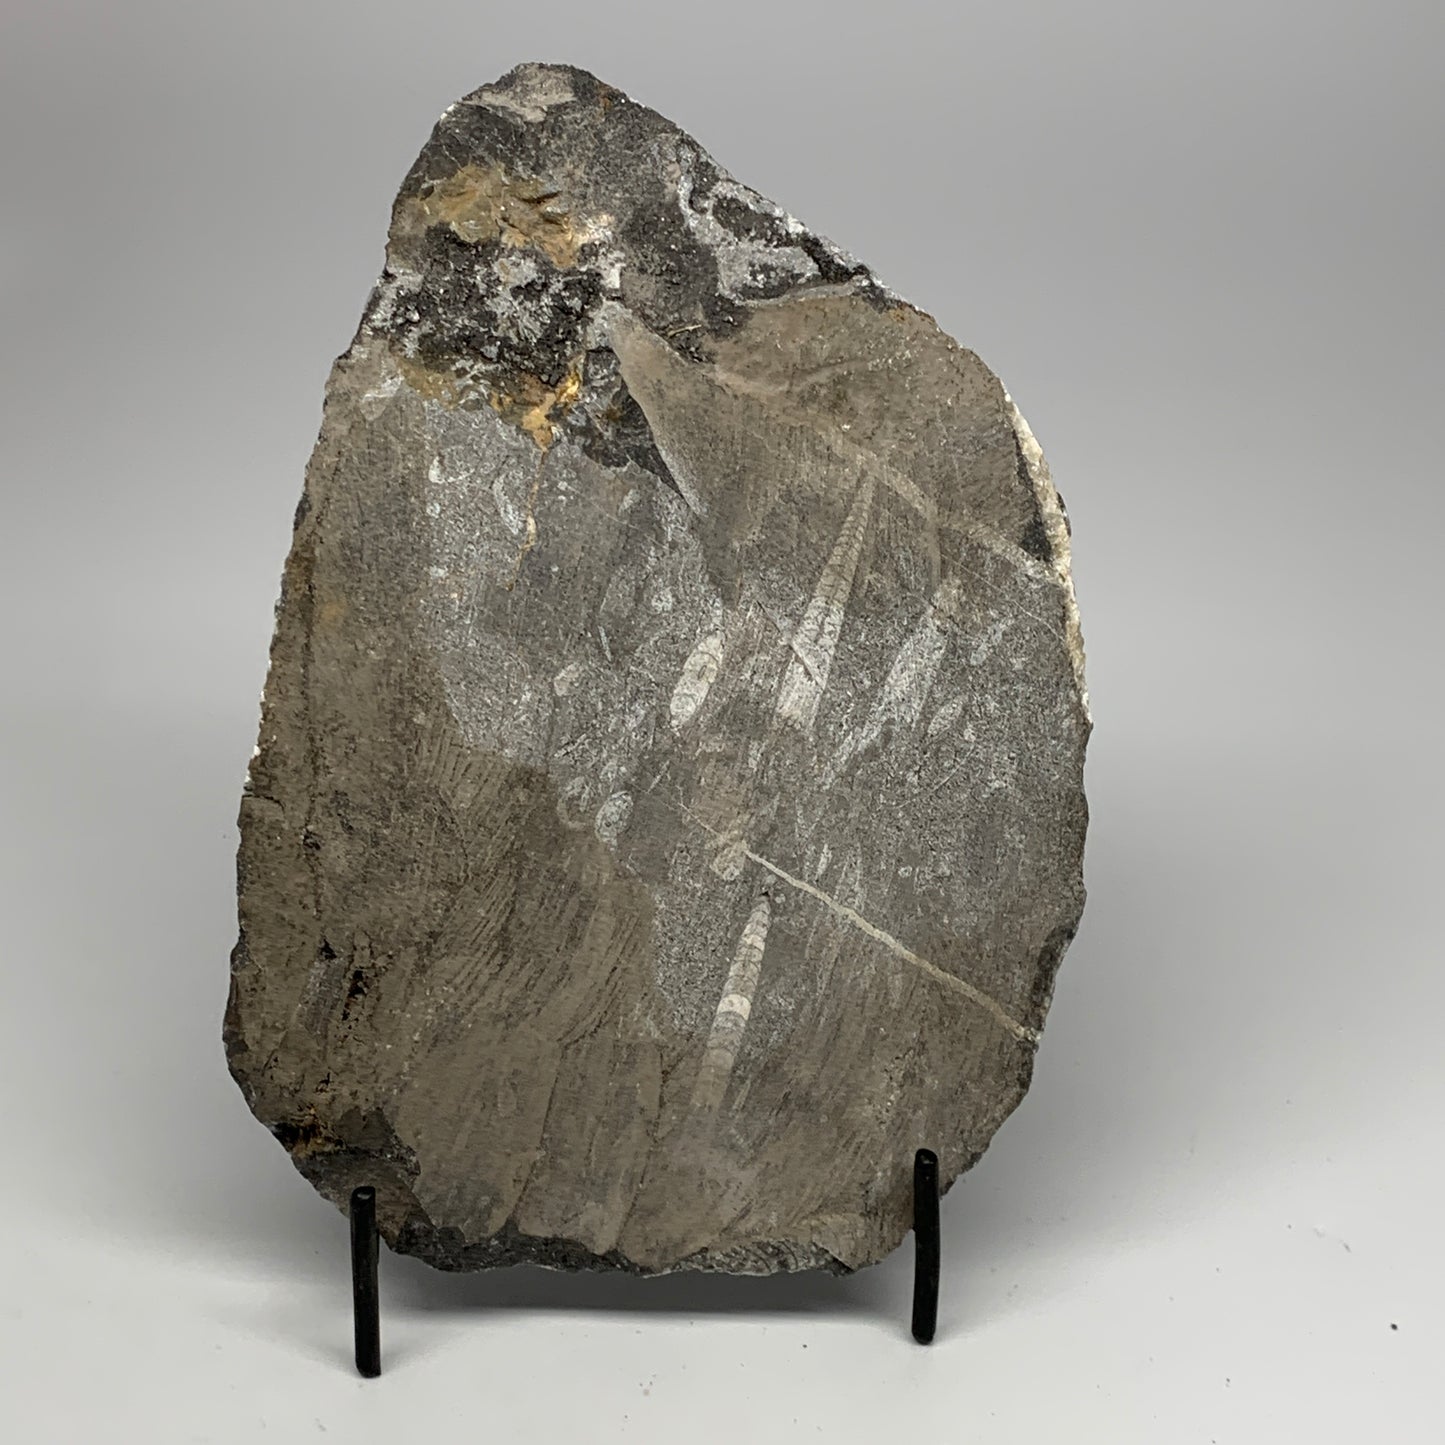 1420g,8.5"x6"x1.7" Fossils Orthoceras Plate Plaque SQUID, Home Decor, B23499